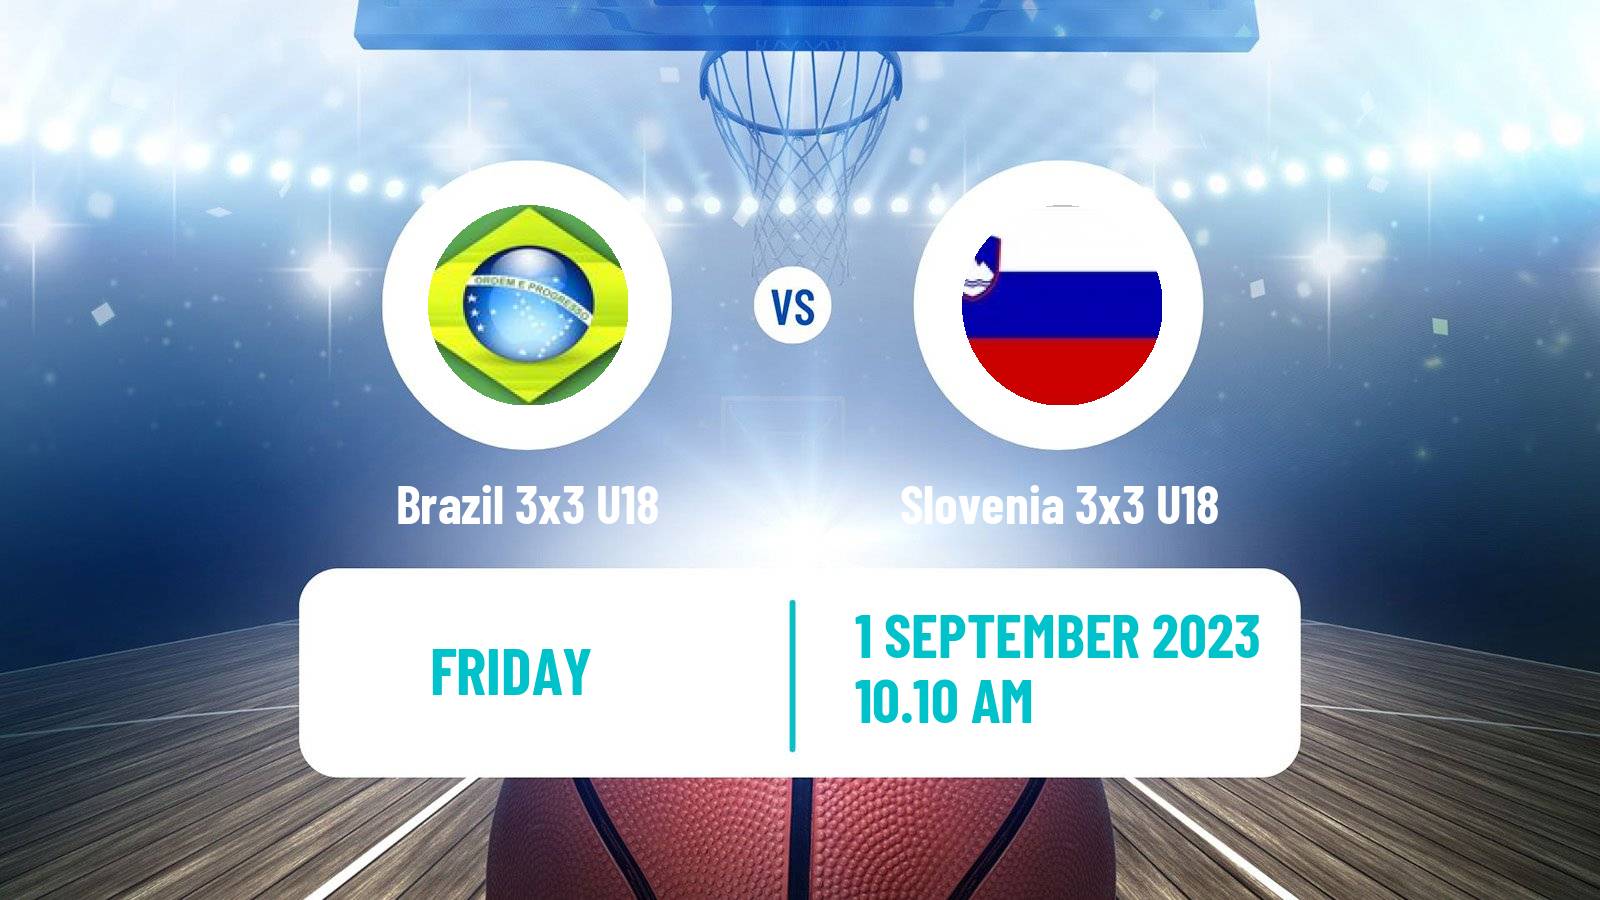 Basketball World Cup Basketball 3x3 U18 Brazil 3x3 U18 - Slovenia 3x3 U18